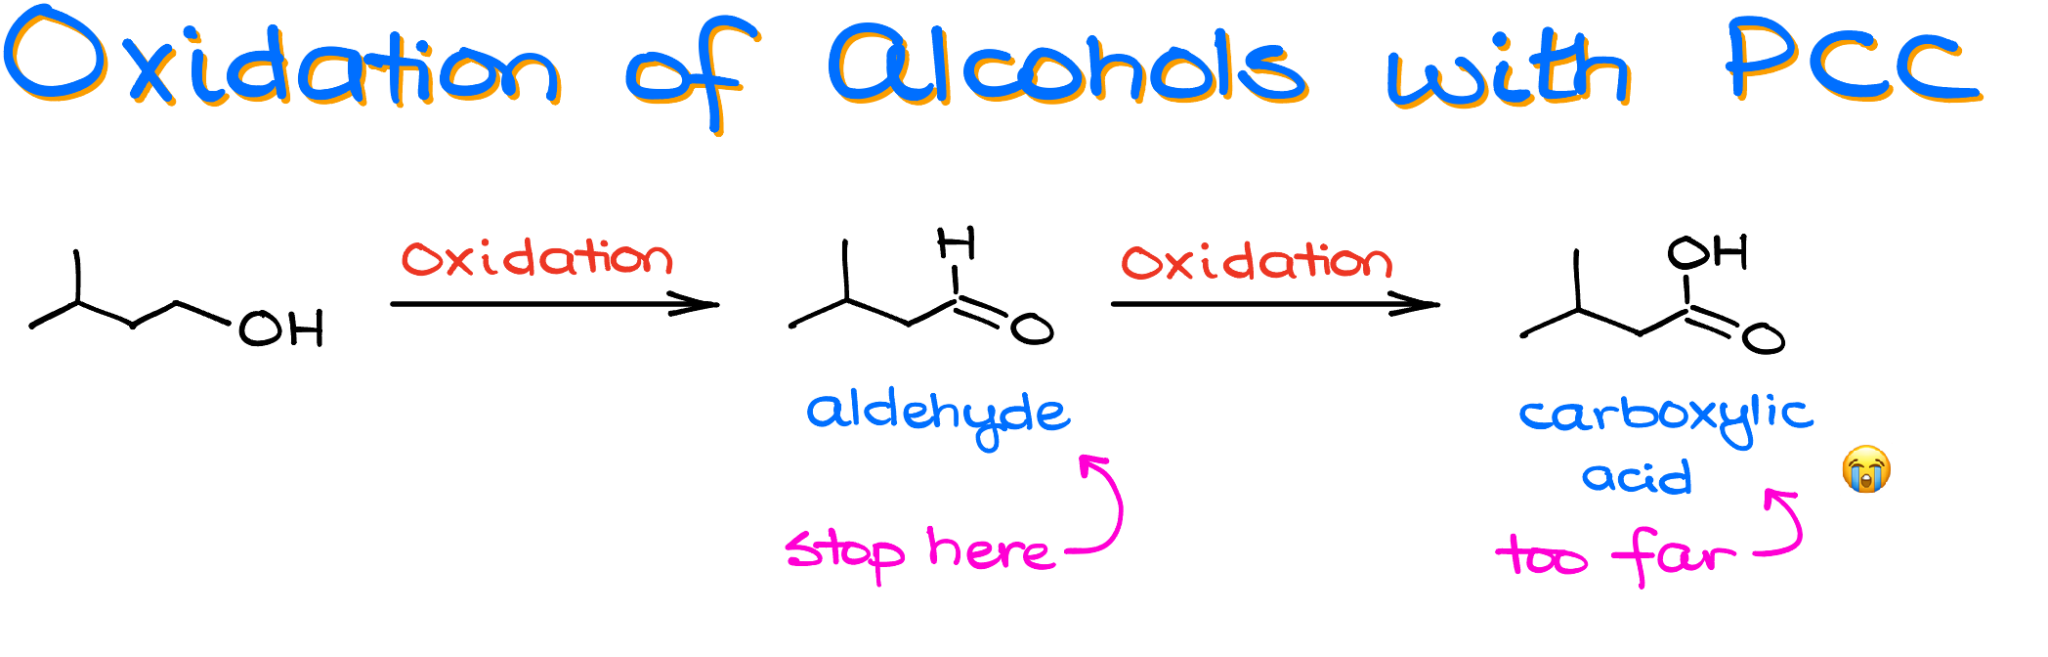 Oxidation of Alcohols with PCC — Organic Chemistry Tutor